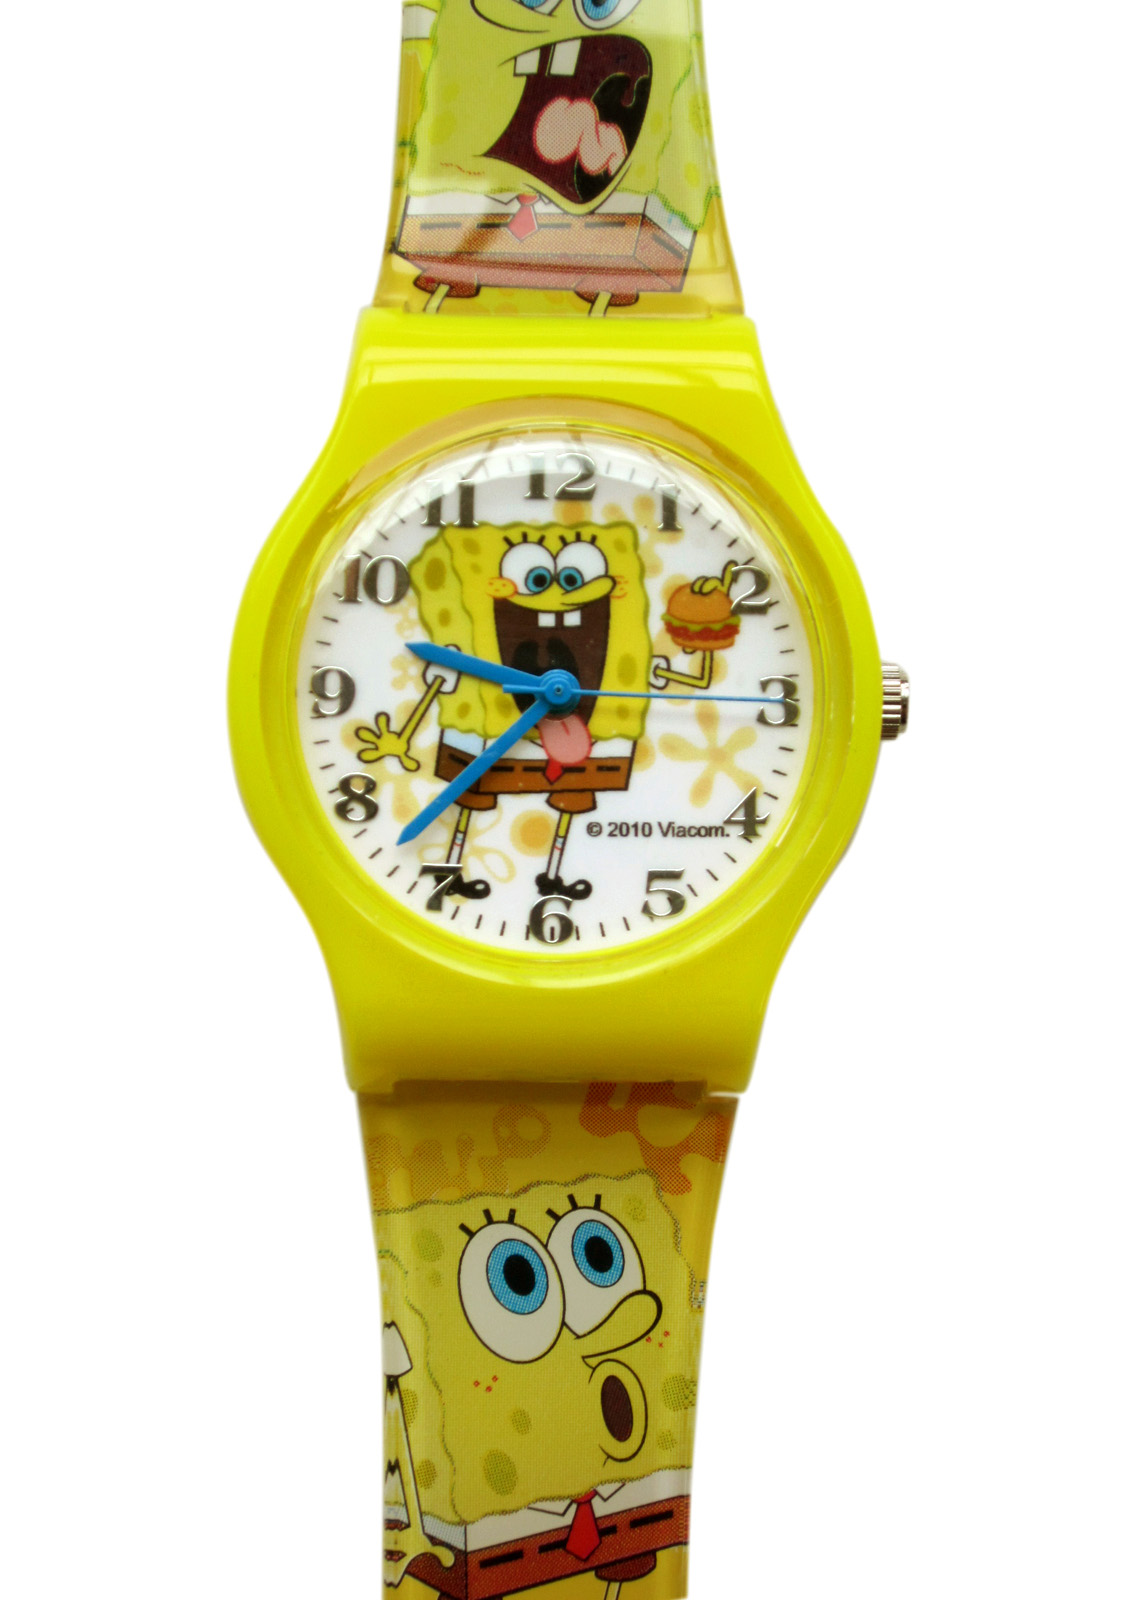 spongebob squarepants watch cartoon